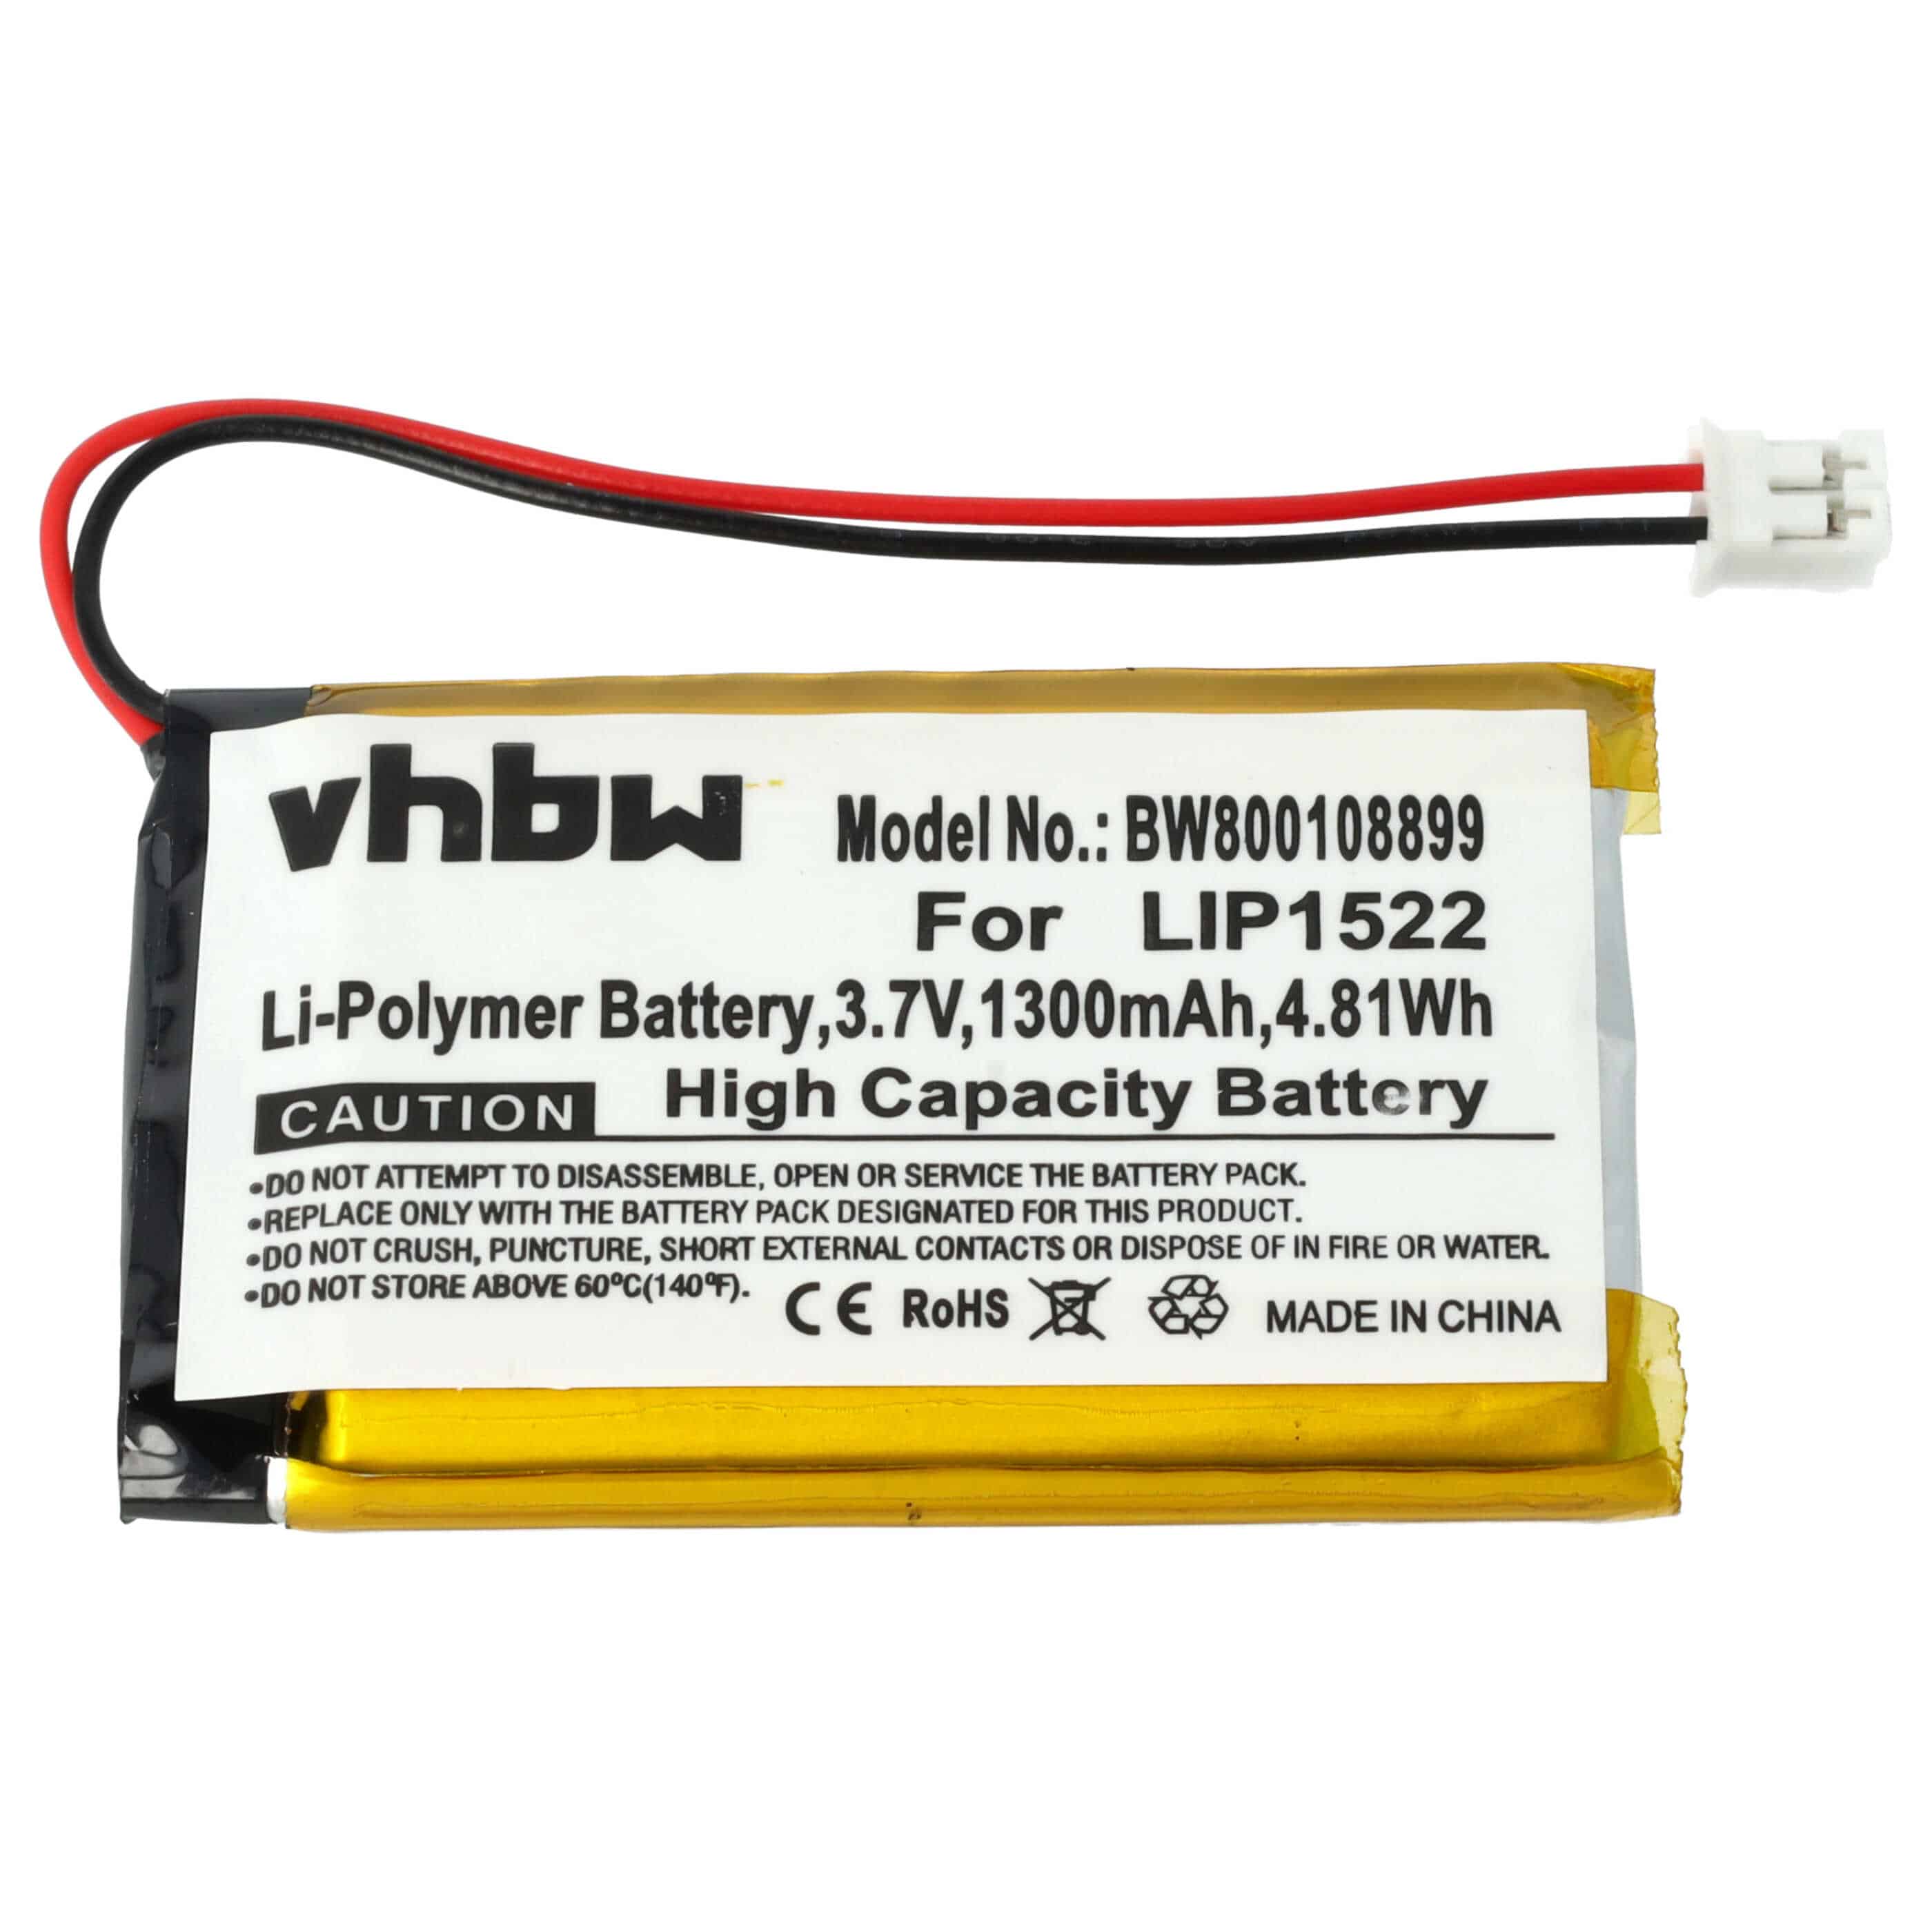 Gamer Joypad Battery Replacement for Sony LIP1522, KCR1410 - 1300mAh 3.7V Li-Ion